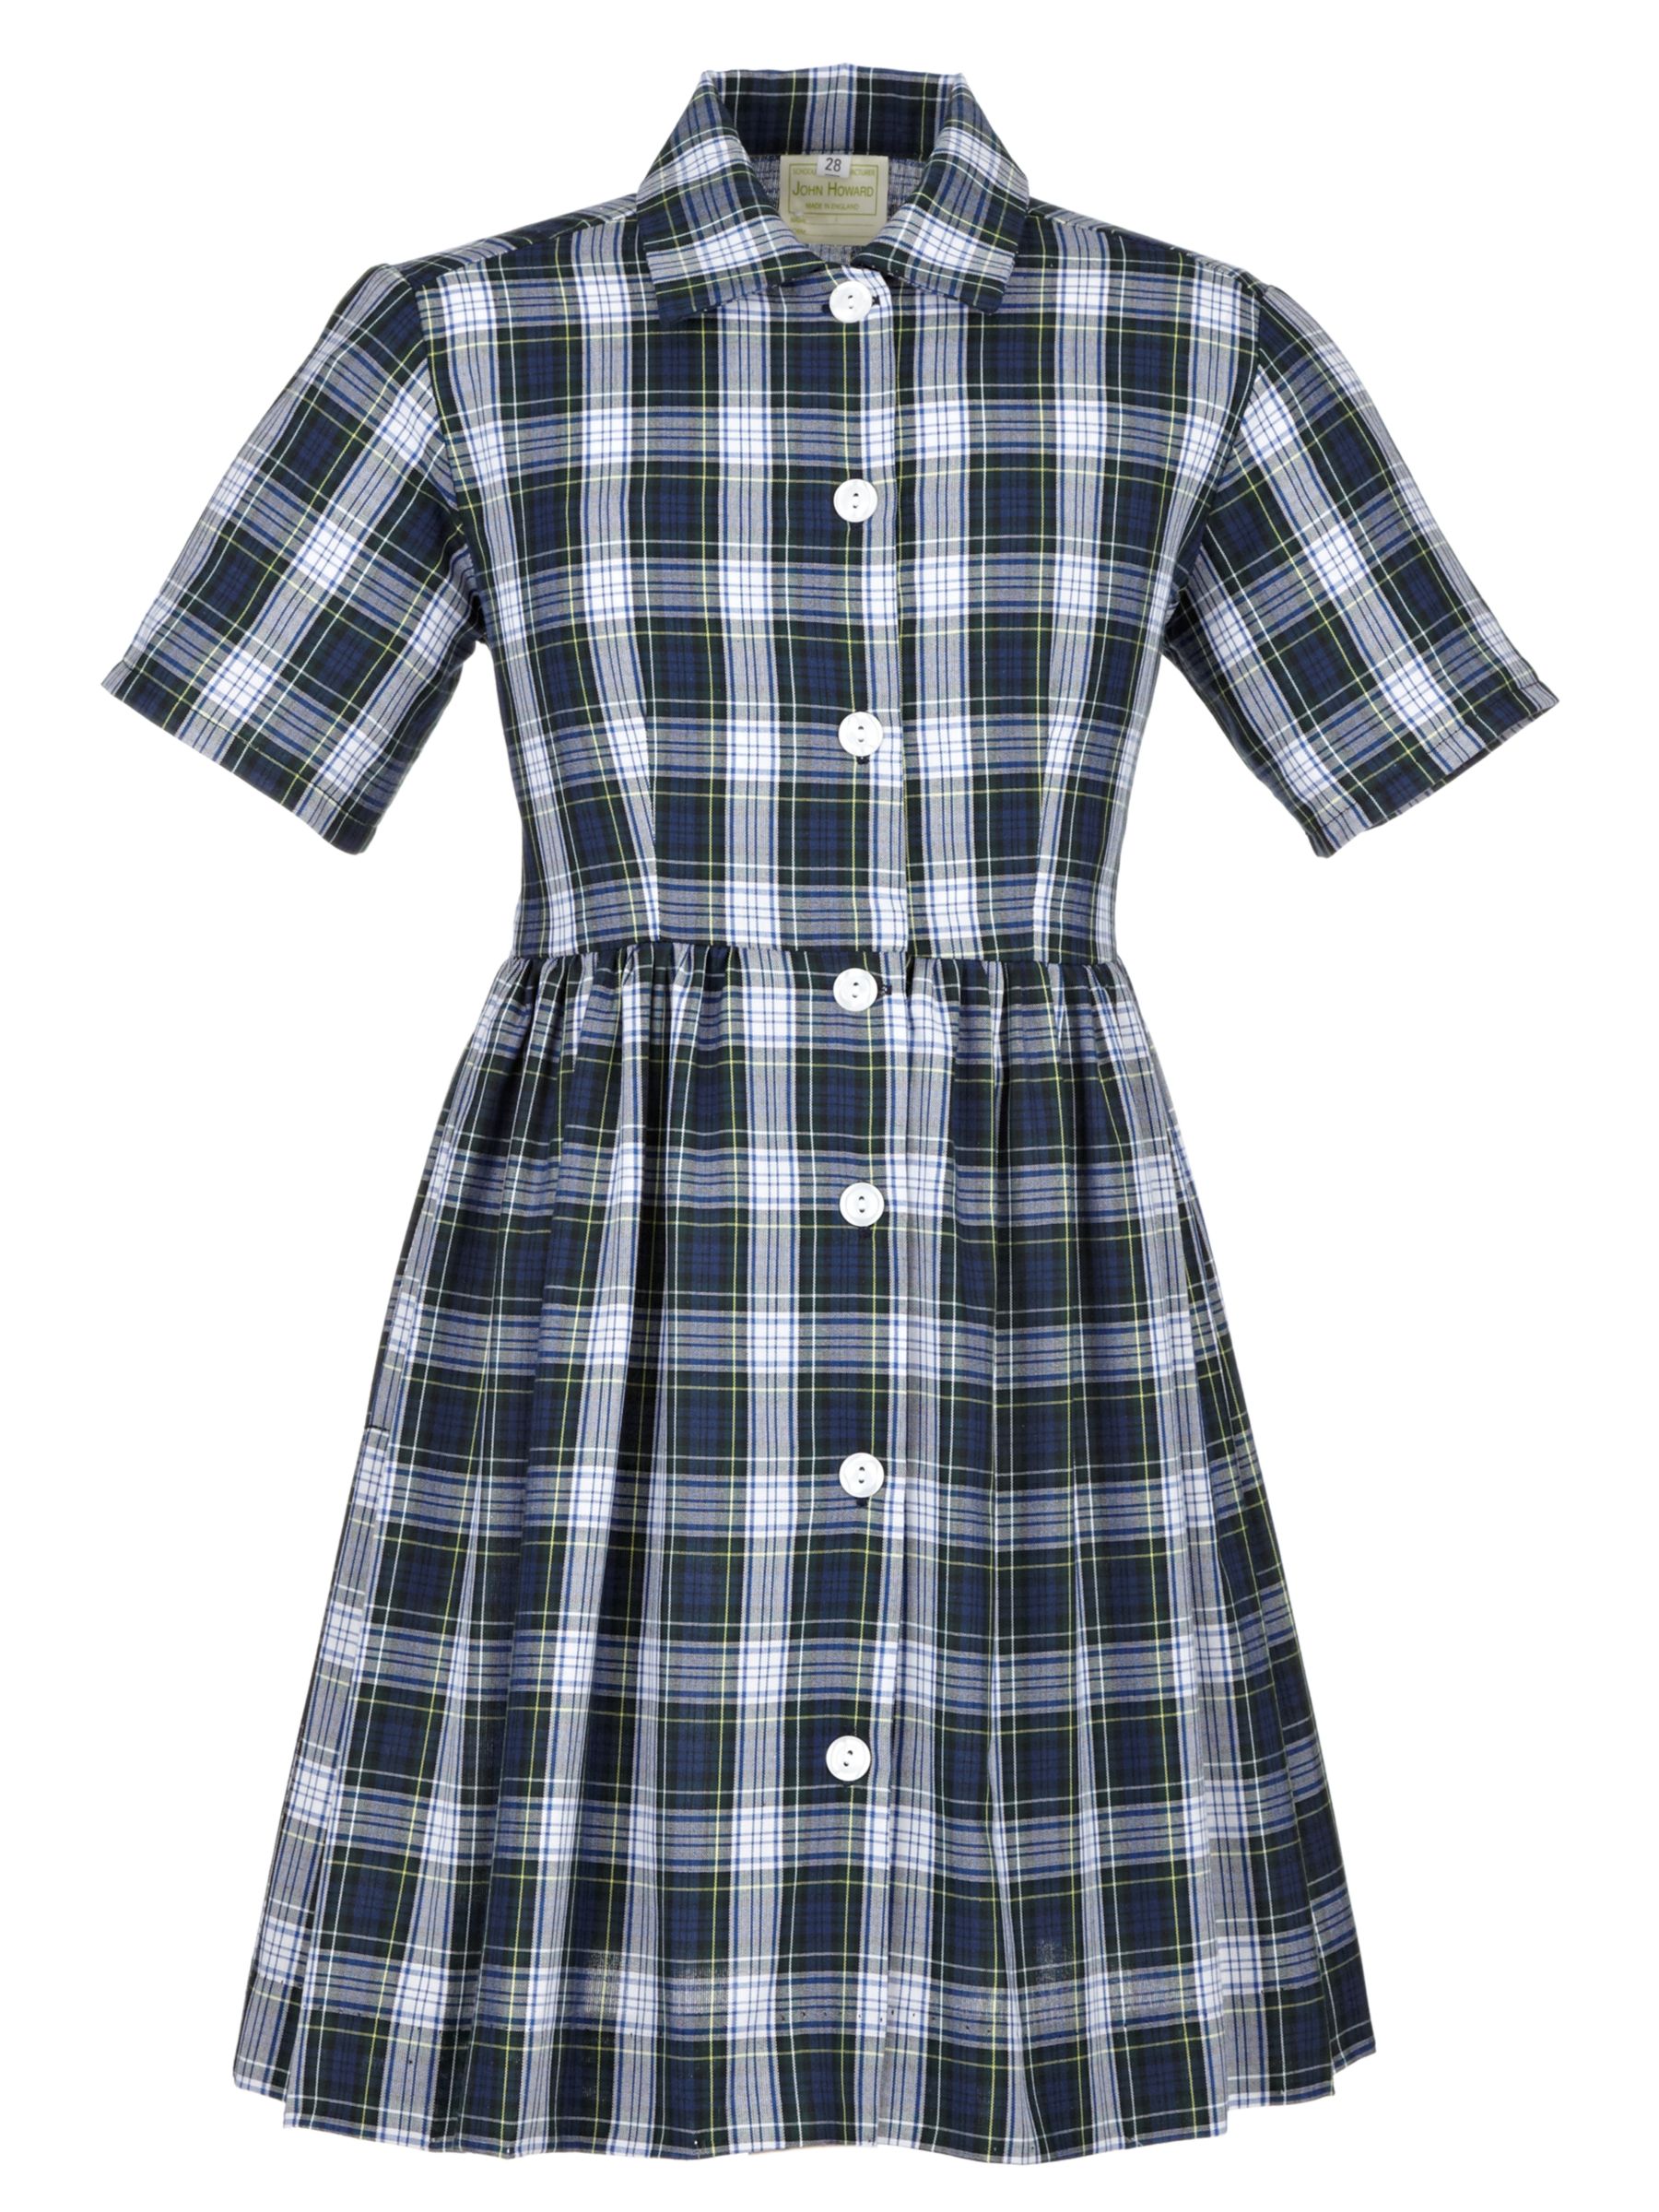 Buy Girl's School Summer Dress, Tartan | John Lewis